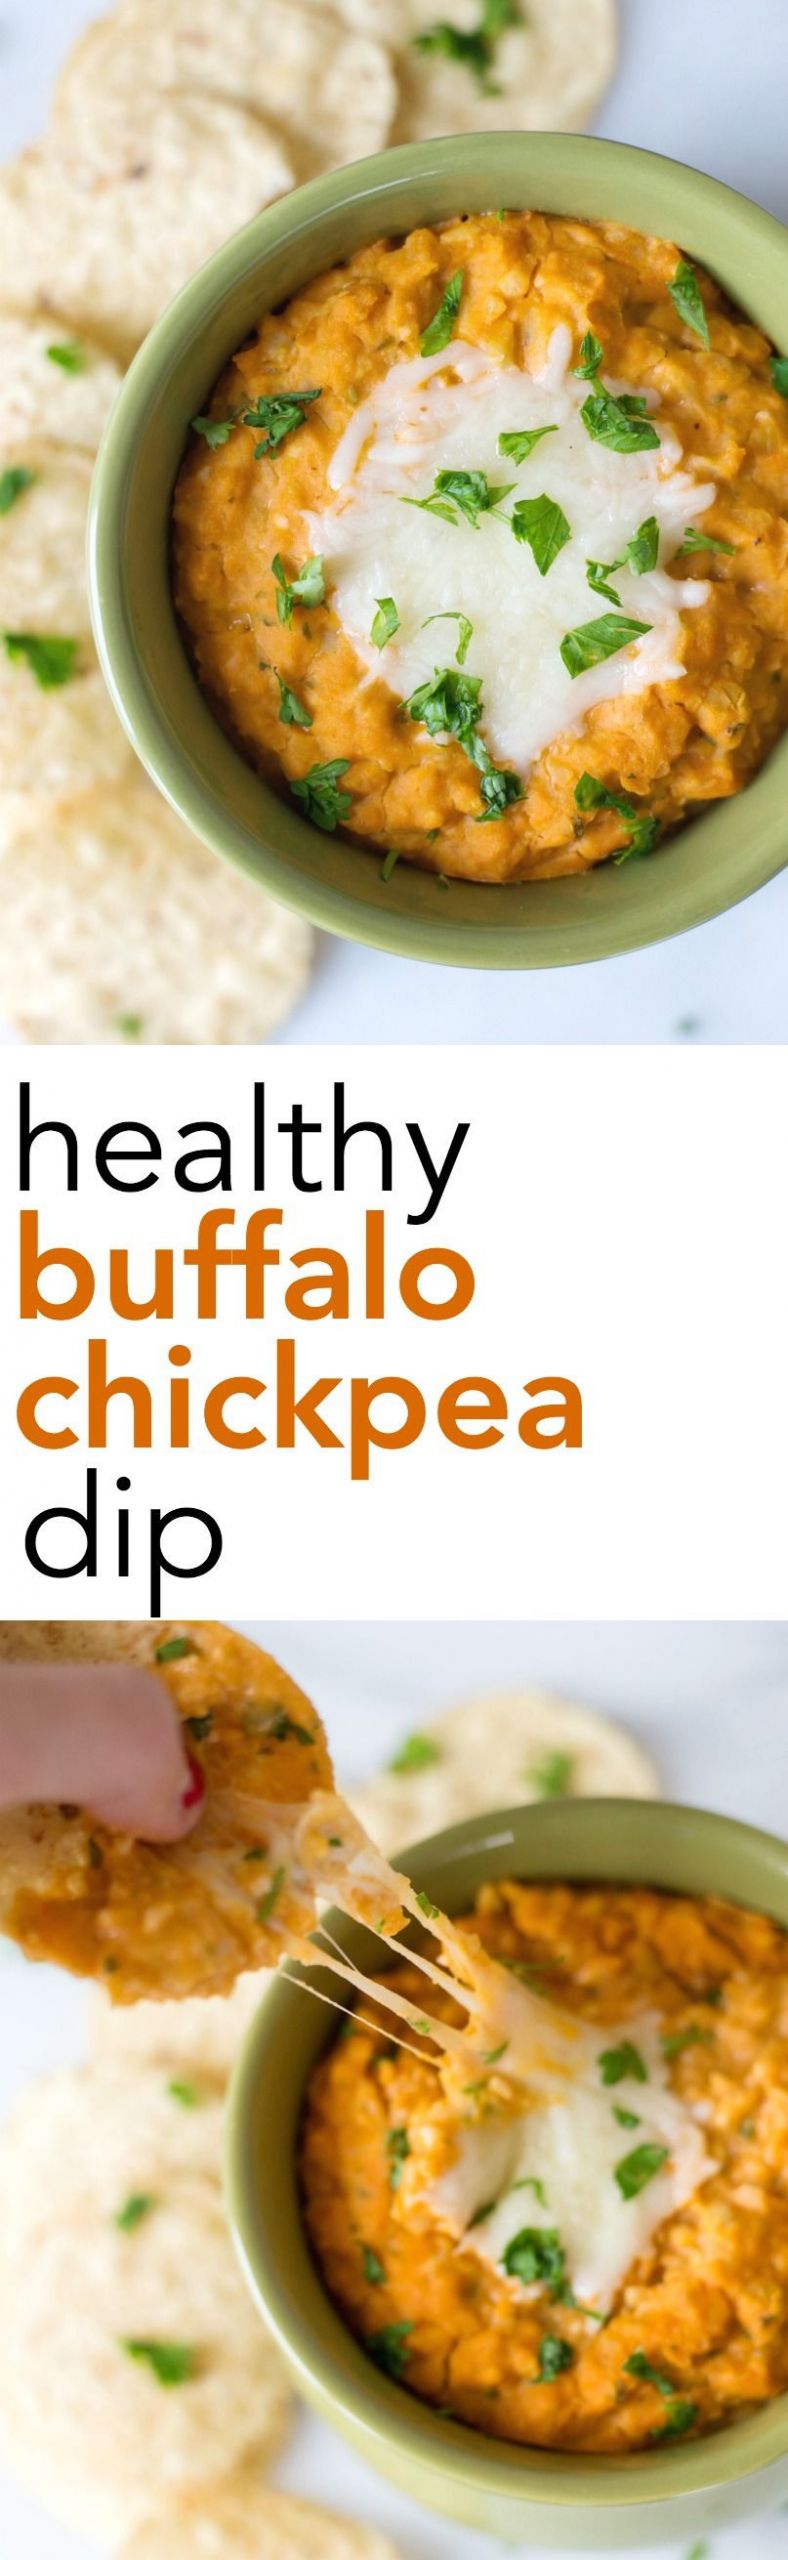 Vegetarian Game Day Recipes
 Healthy Buffalo Chickpea Dip Recipe